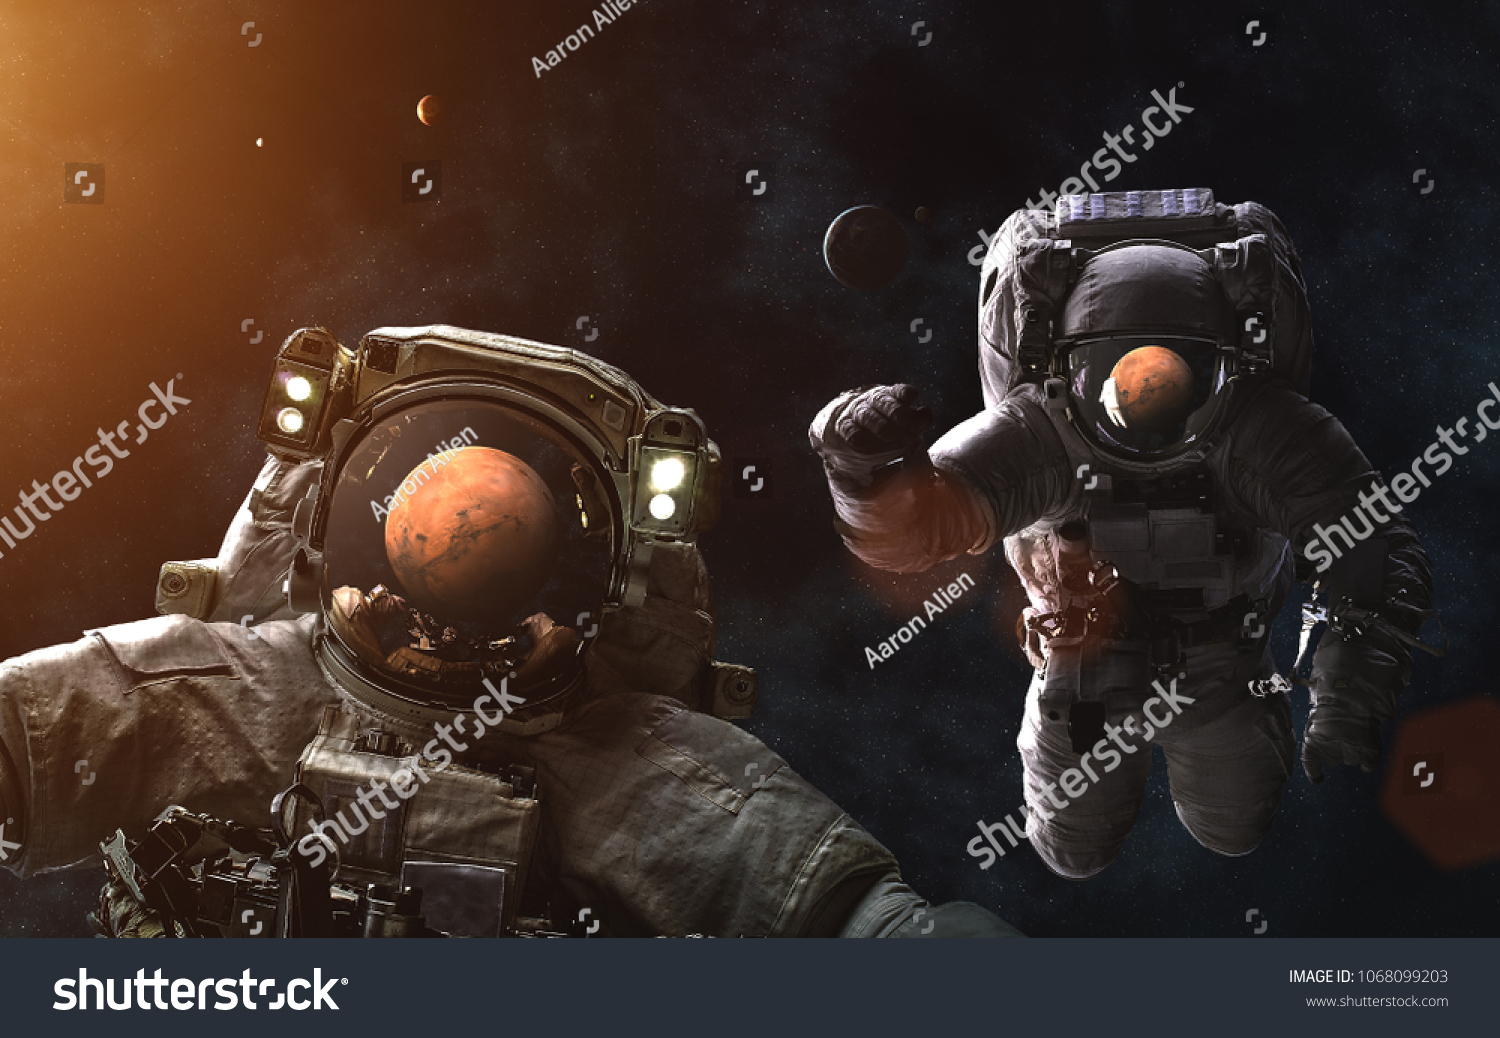 Arrival Mars Solar System Astronauts Image Stock Photo Edit Now